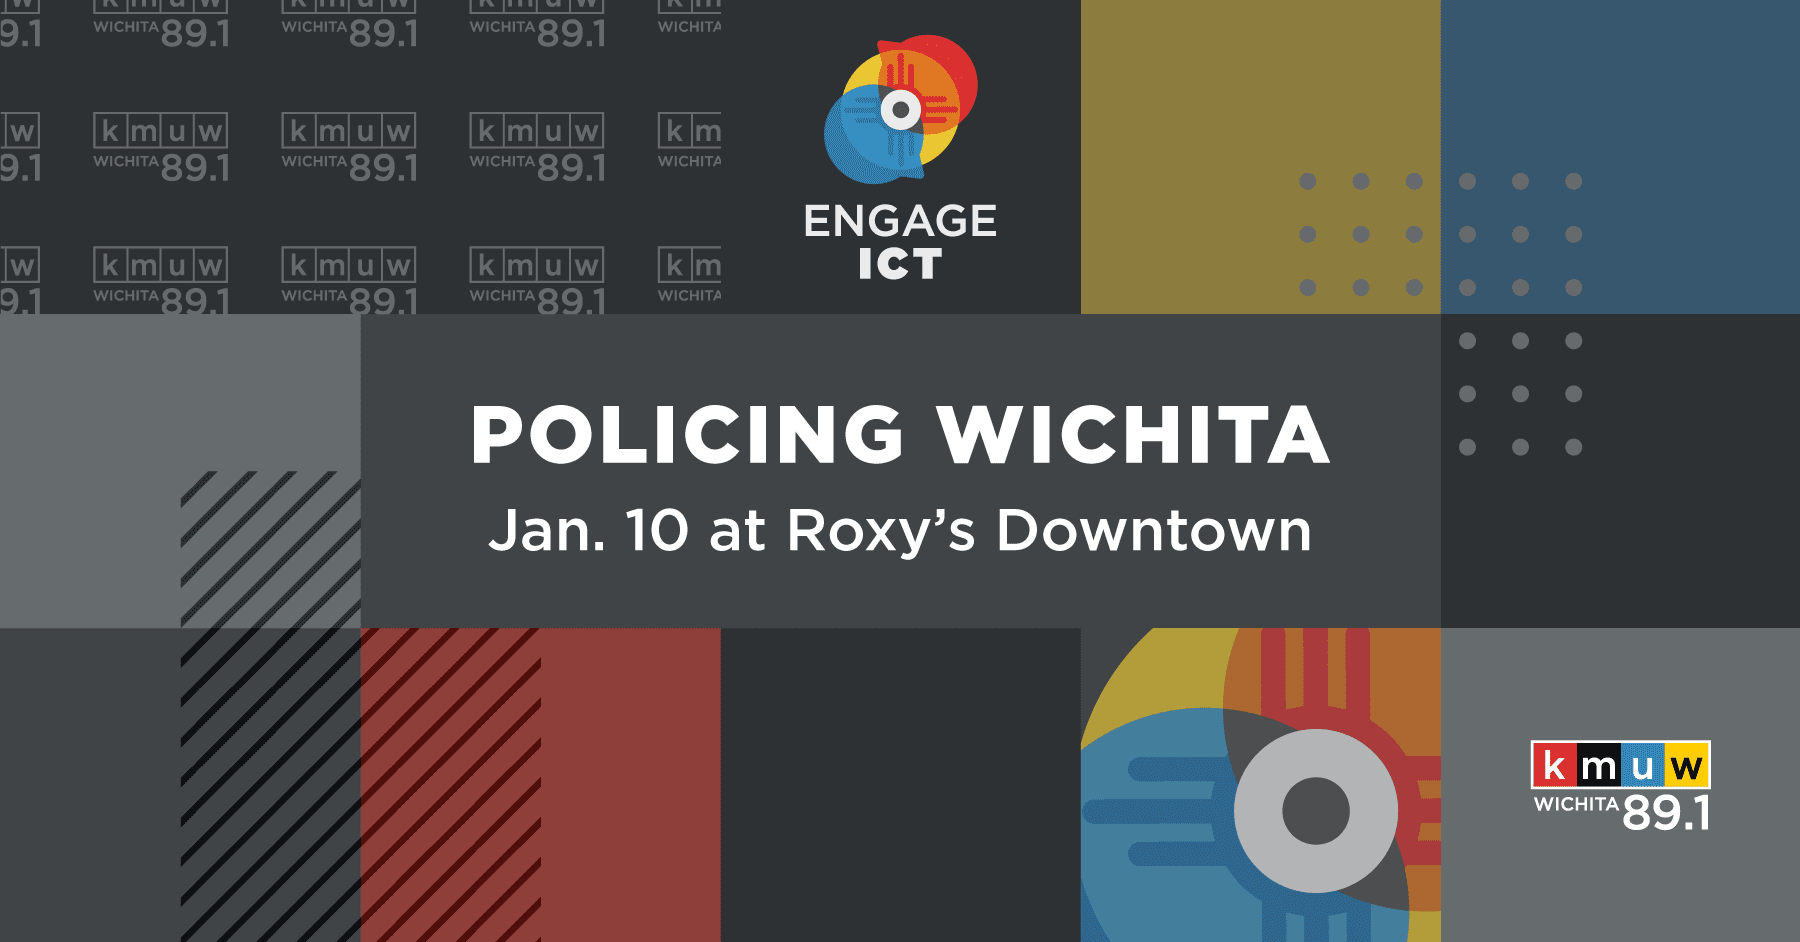 Engage ICT. Policing Wichita. Jan 10 at Roxy's Downtown. KMUW Wichita 89.1.